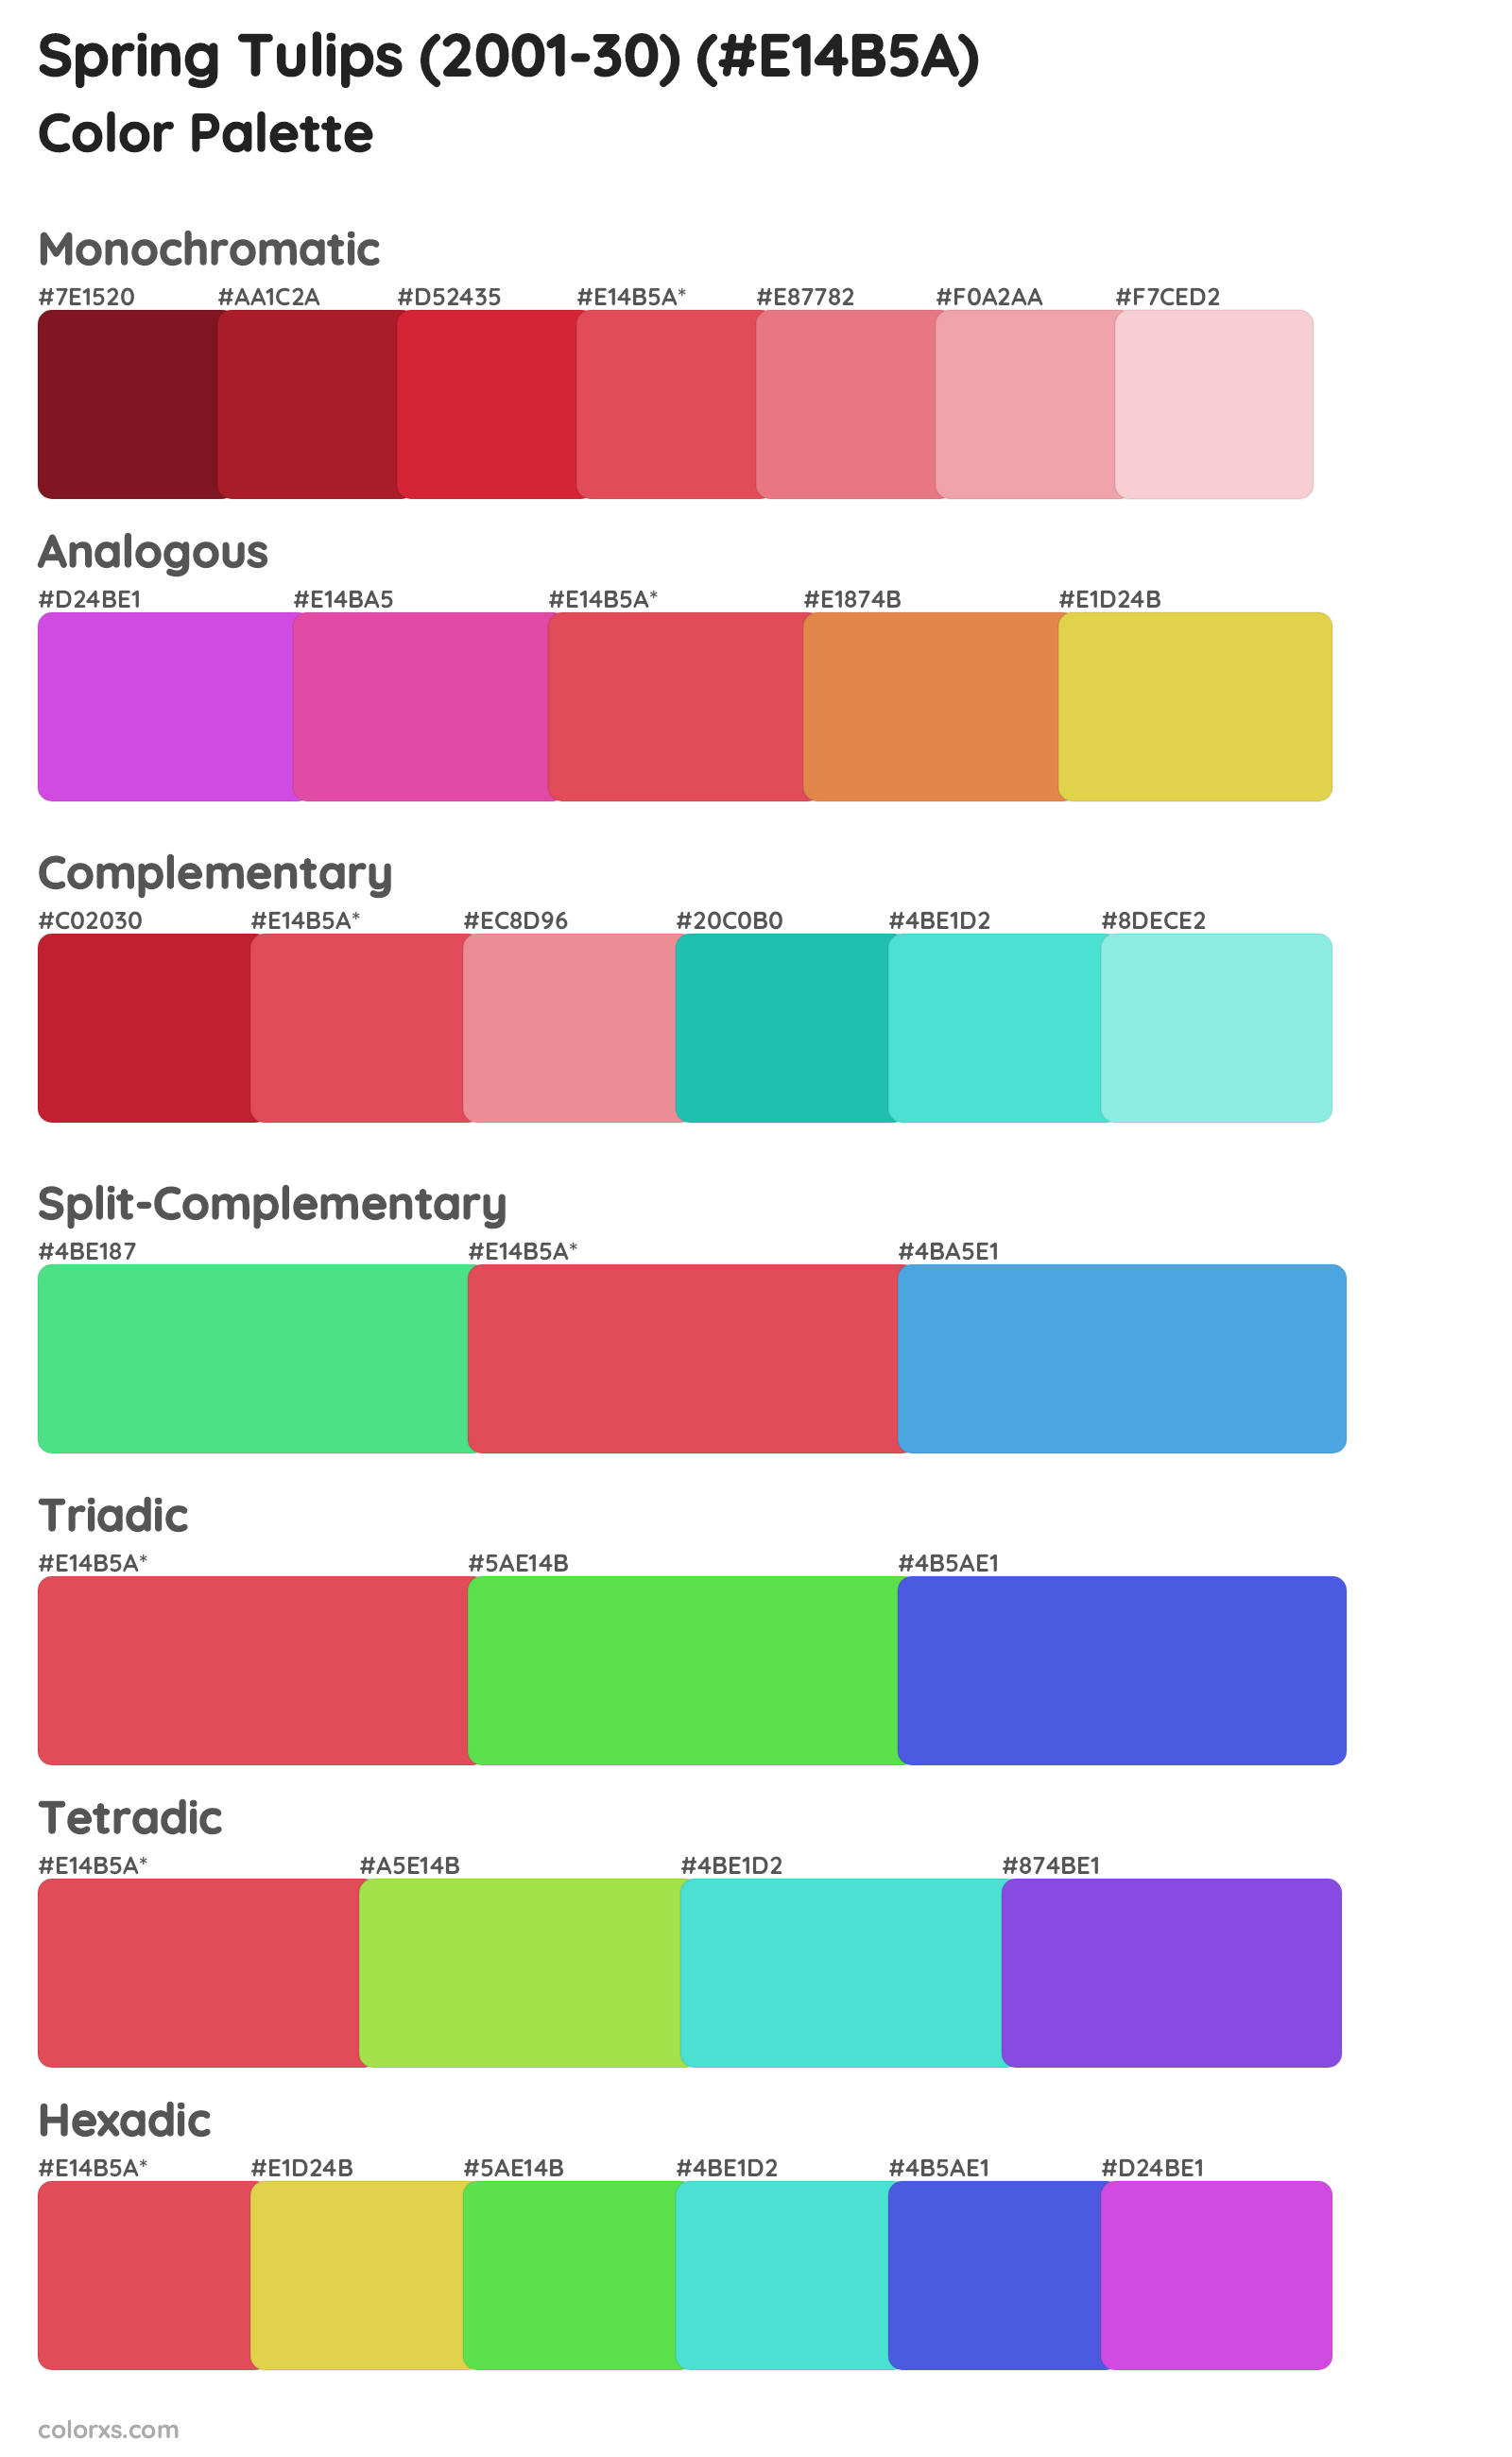 Spring Tulips (2001-30) Color Scheme Palettes